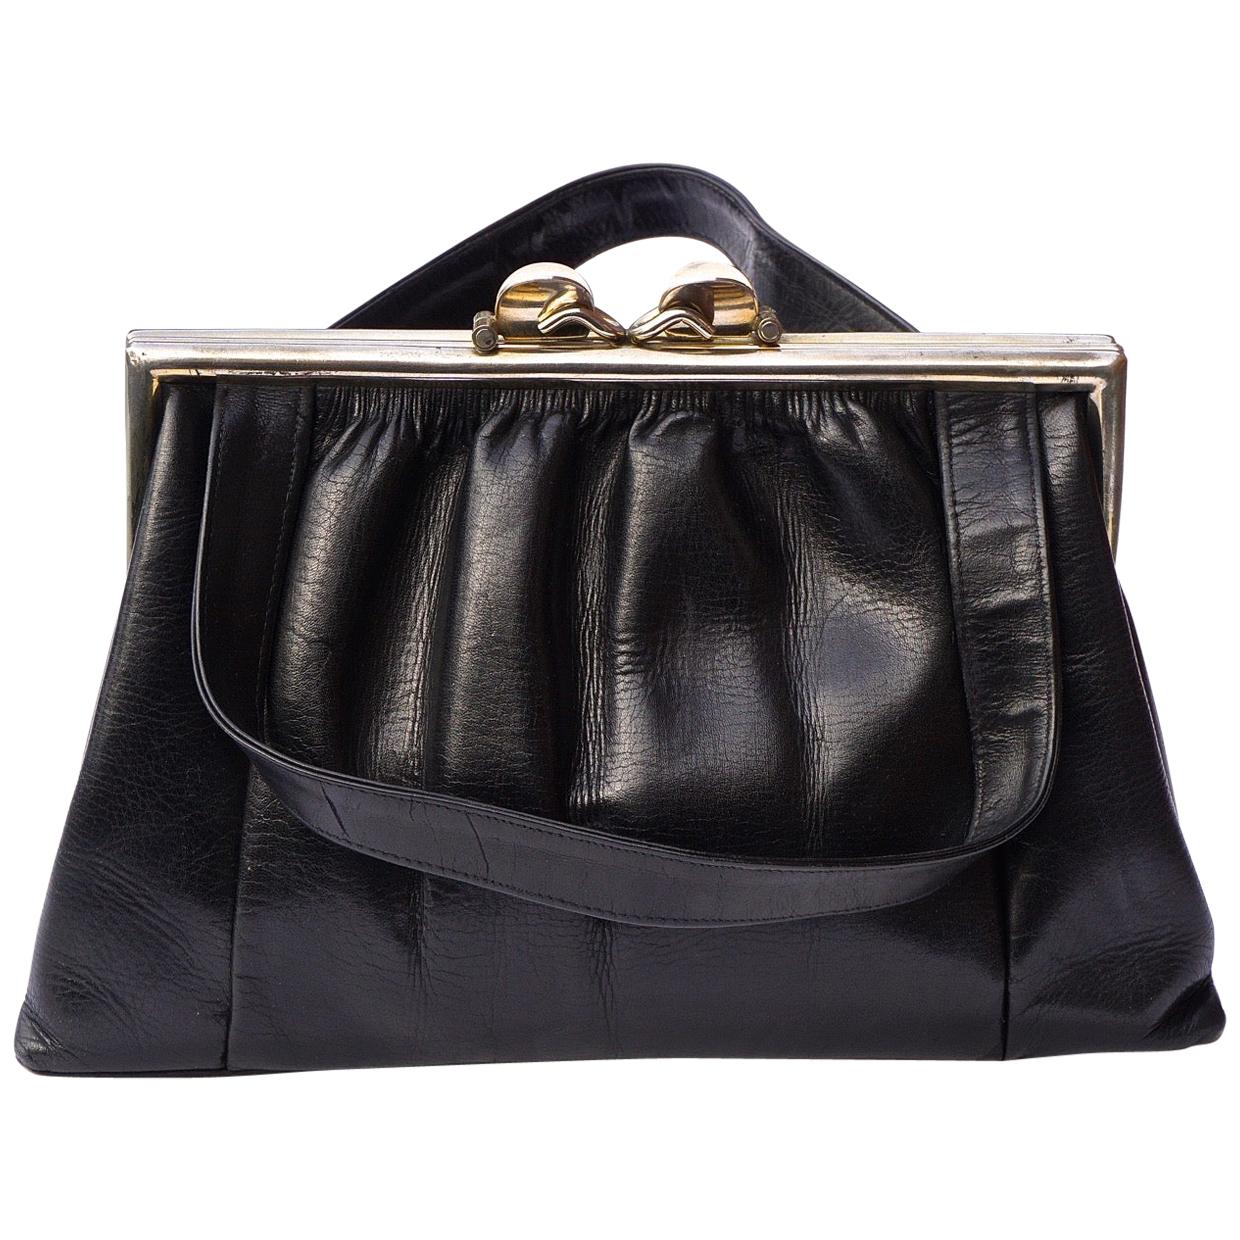 Vaca Lisa Argentina Black Leather Handbag with Silver Tone Fittings 